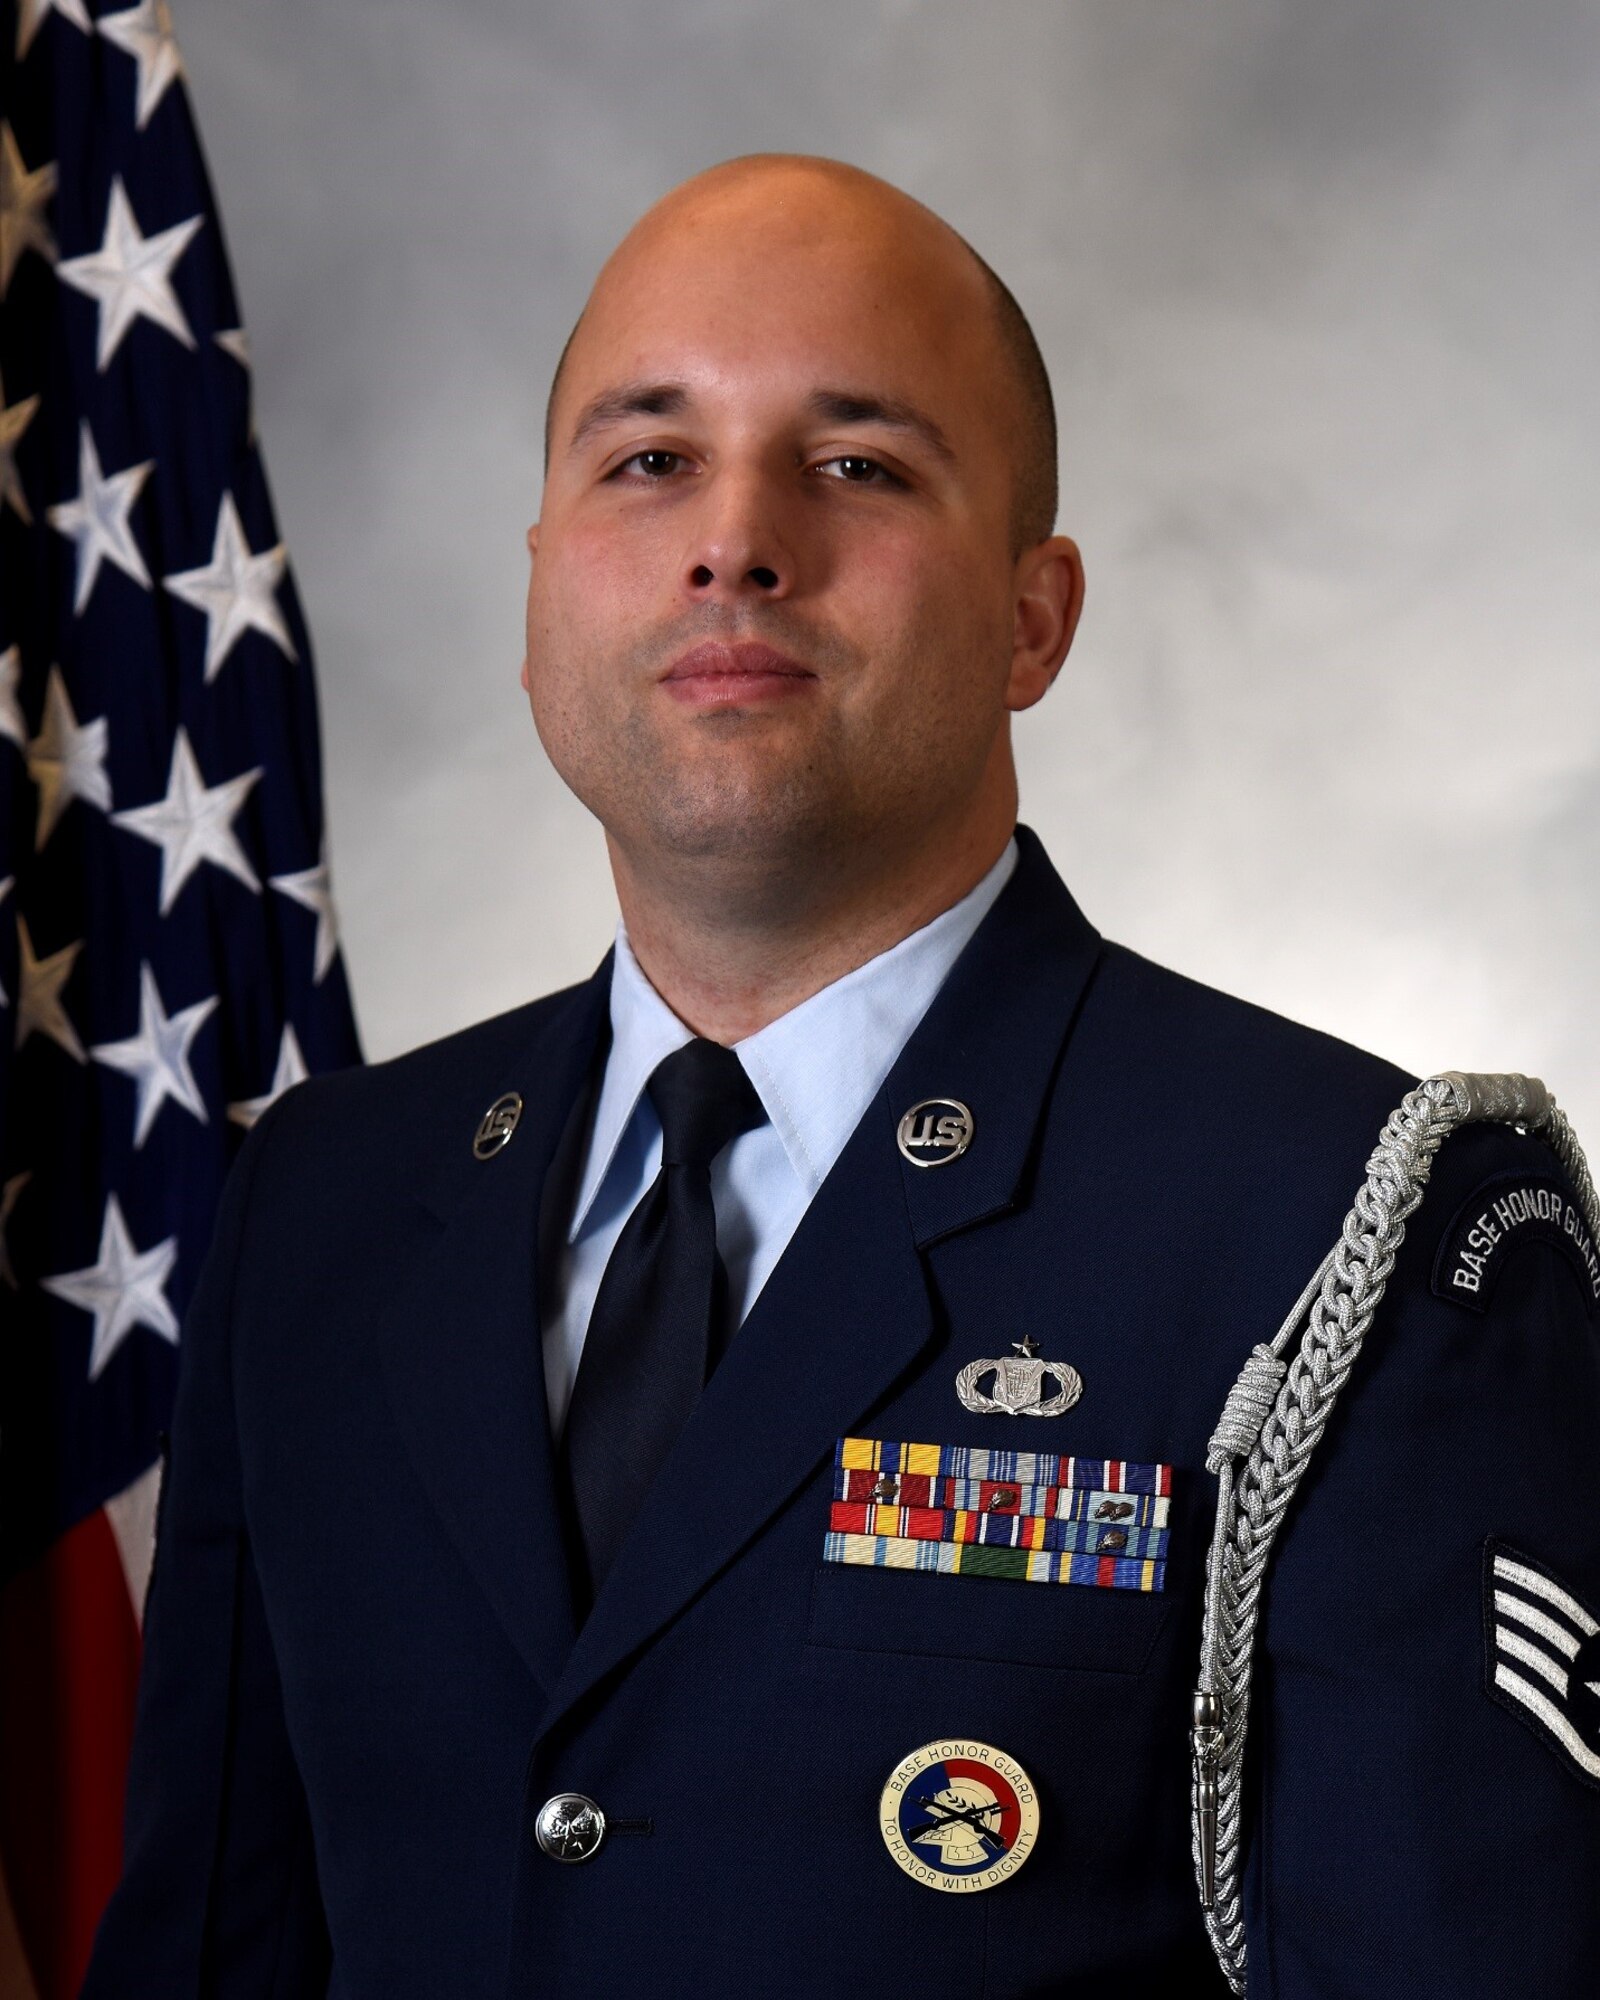 Staff Sgt. Shawn Modjtabai of the 225th Air Defense Squadron wins the Washington Air National Guard Honor Guard Program Manager of the Year award.